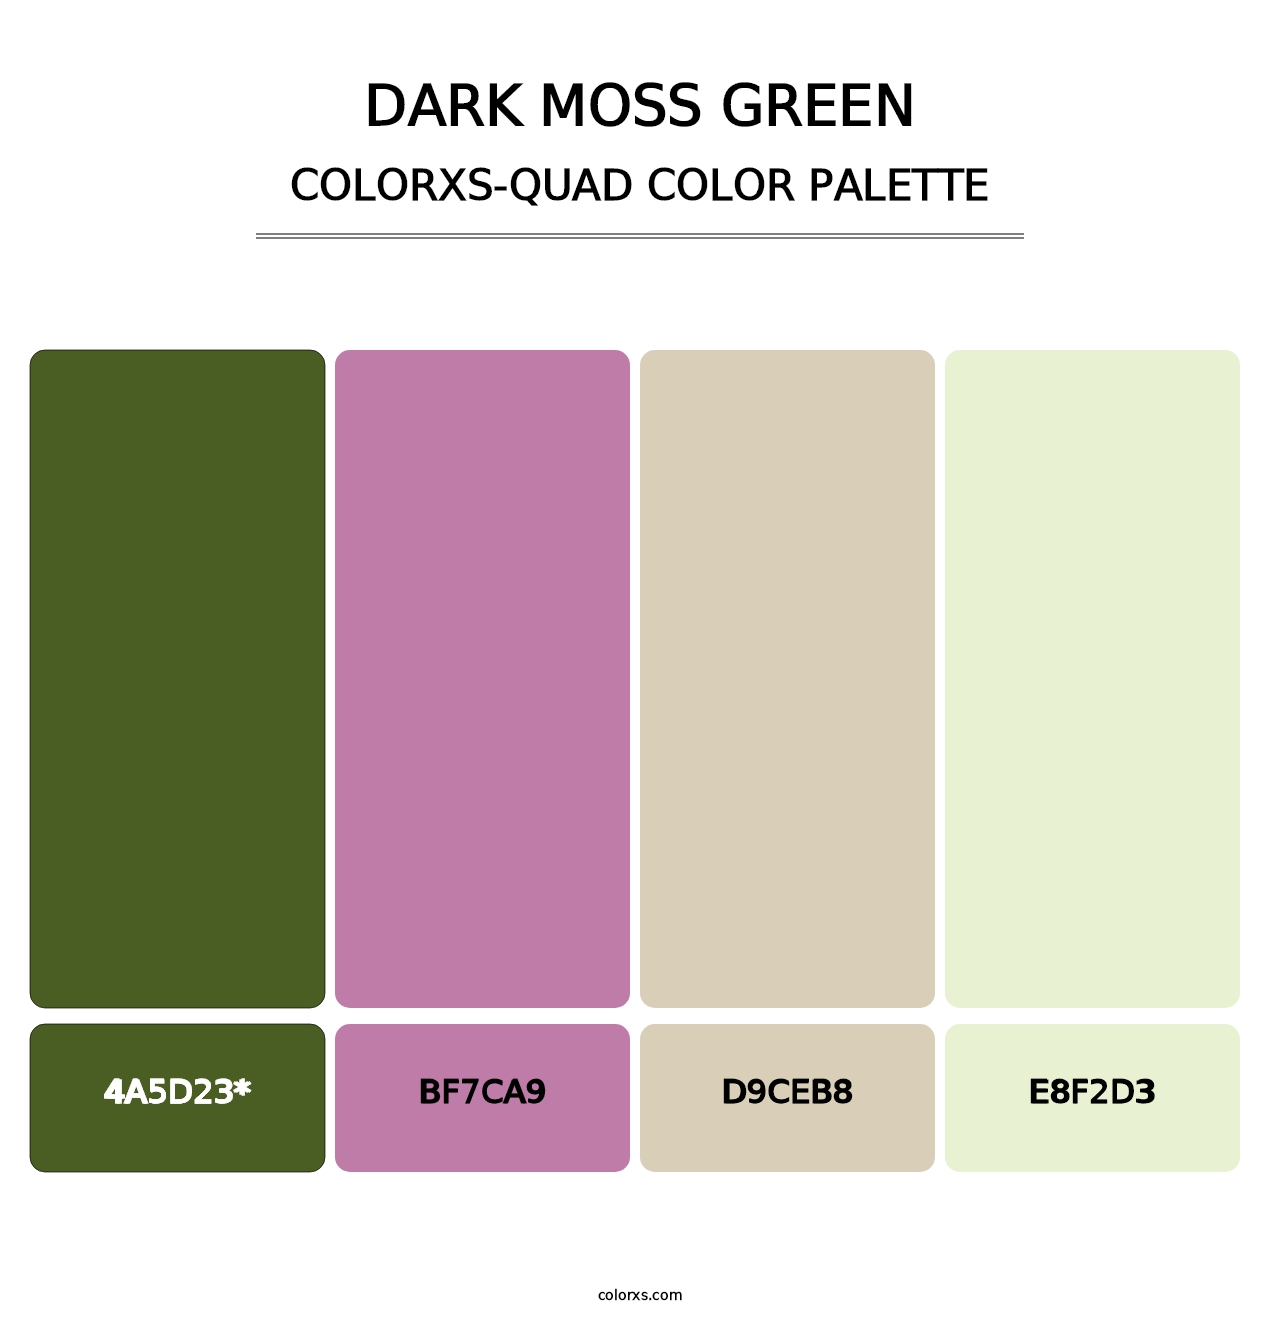 Dark Moss Green - Colorxs Quad Palette